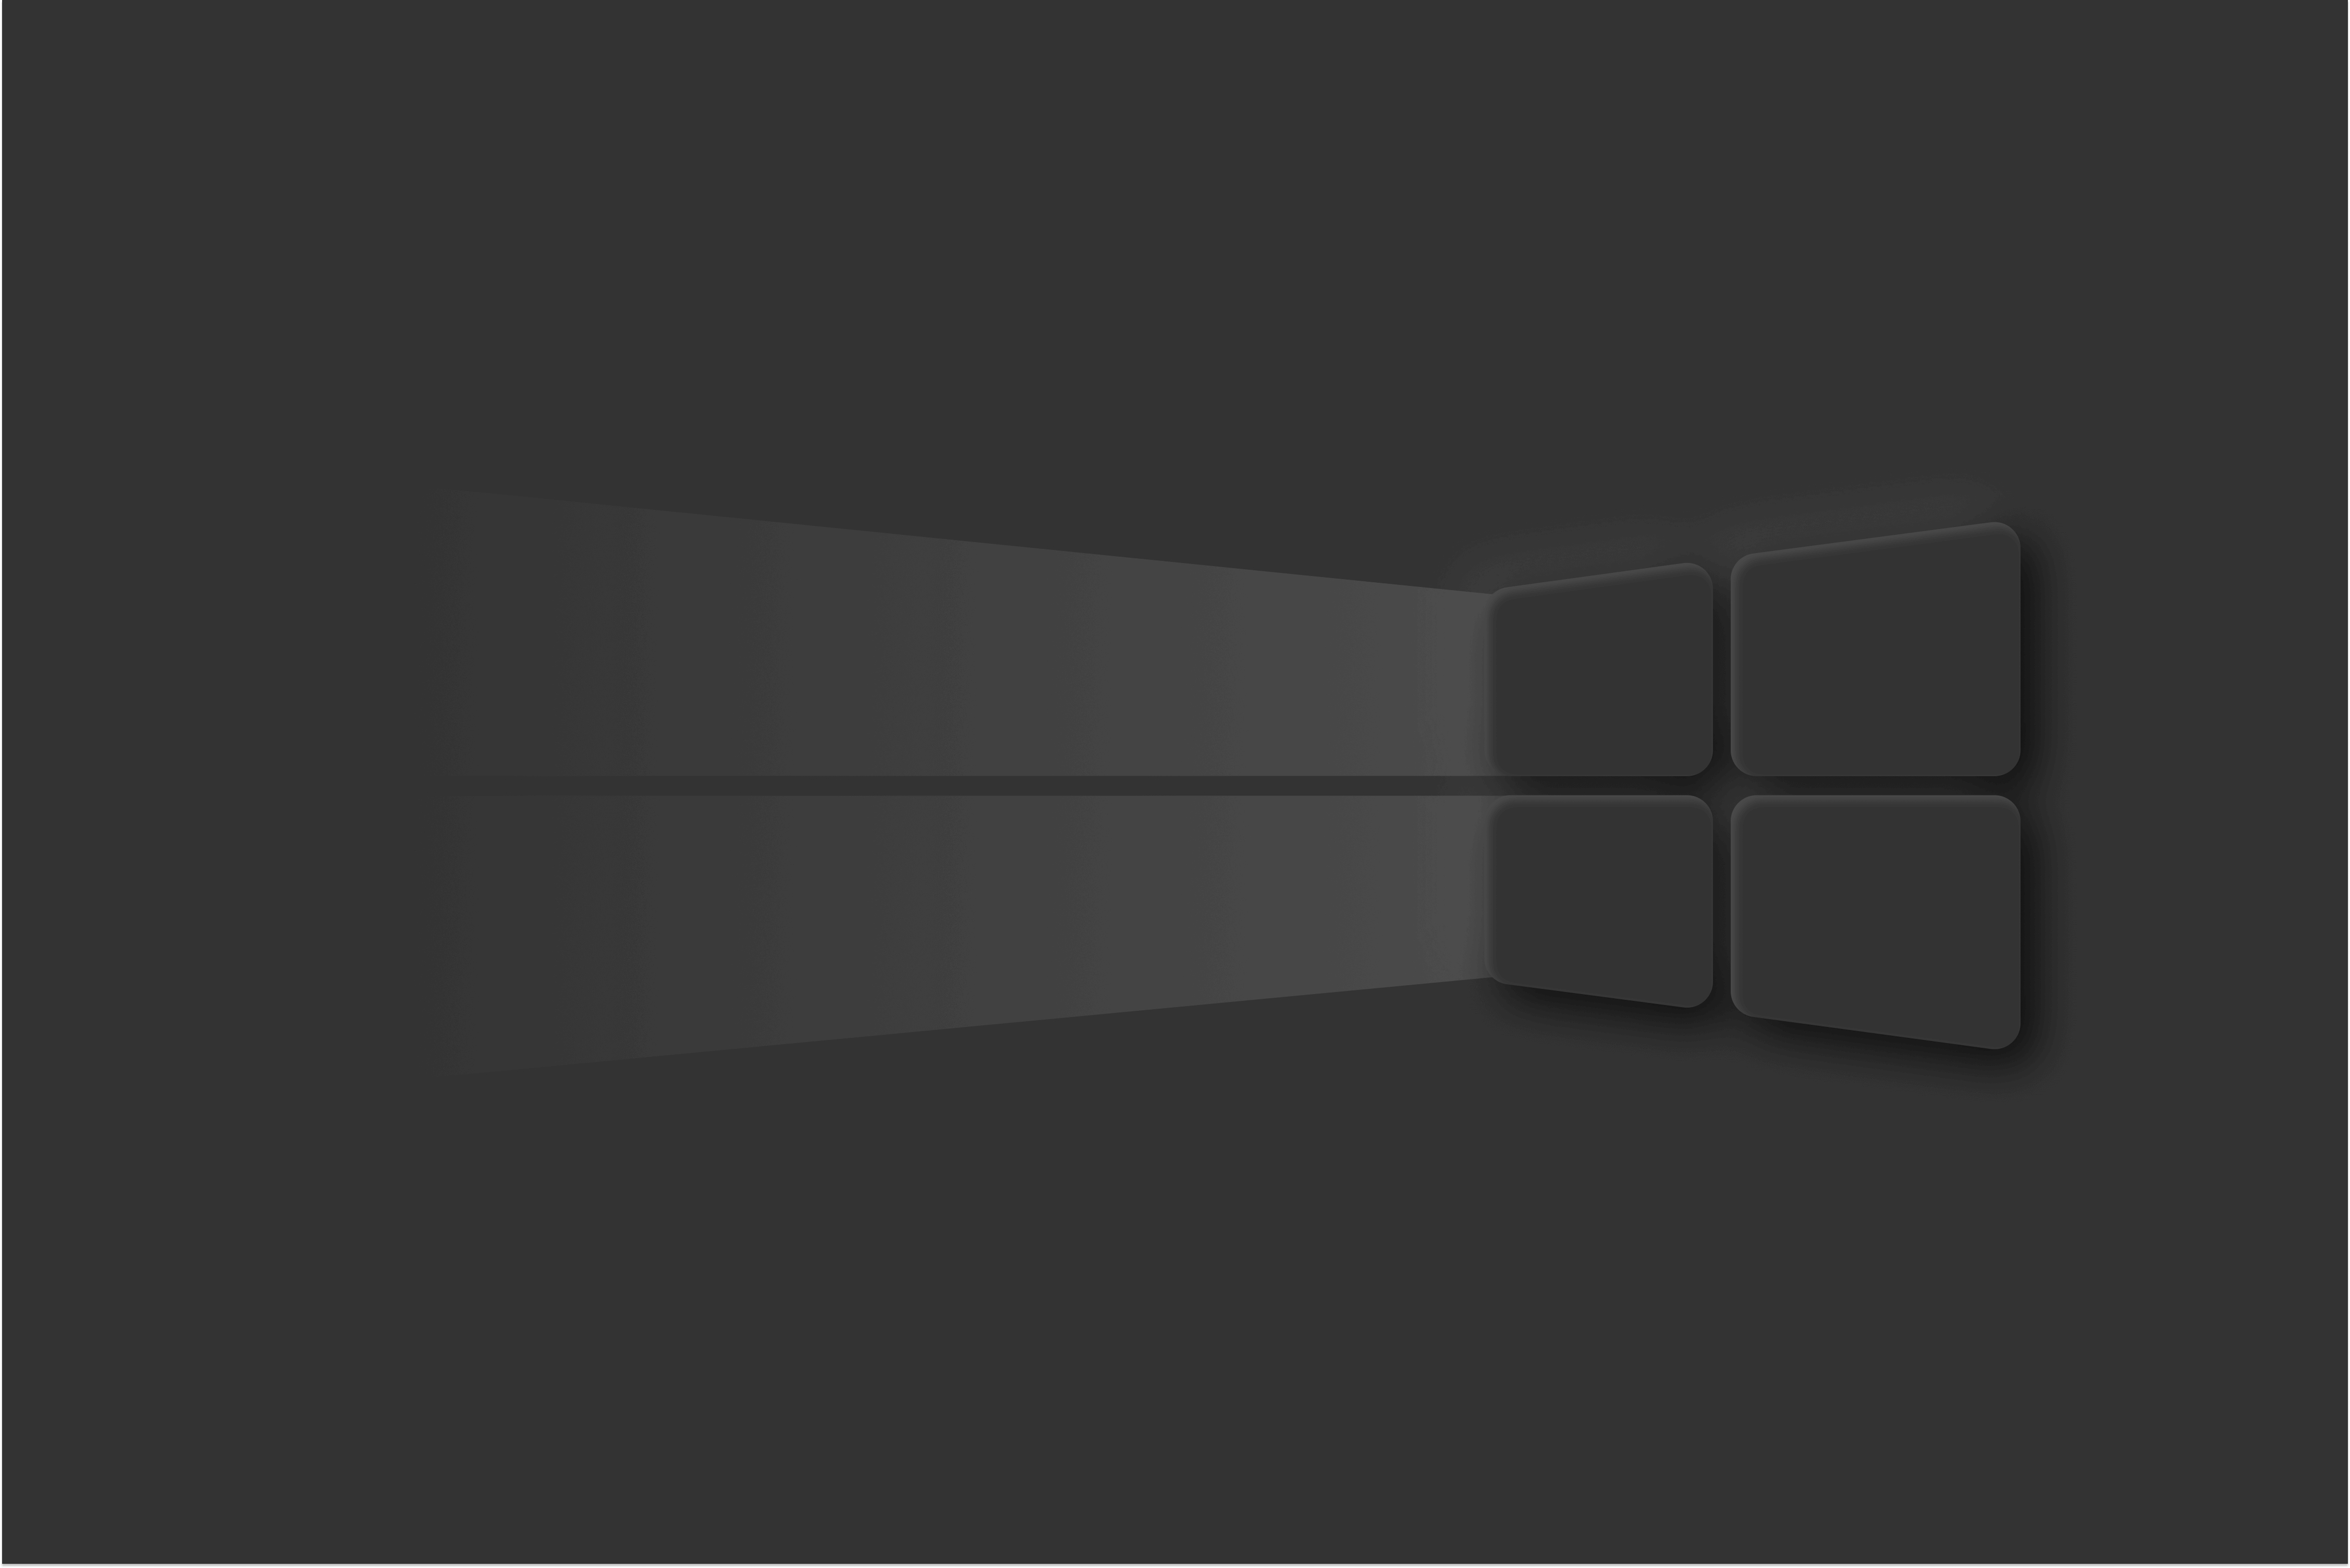 Windows 10 Dark Mode Logo Wallpaper Hd Hi Tech 4k Wallpapers Images